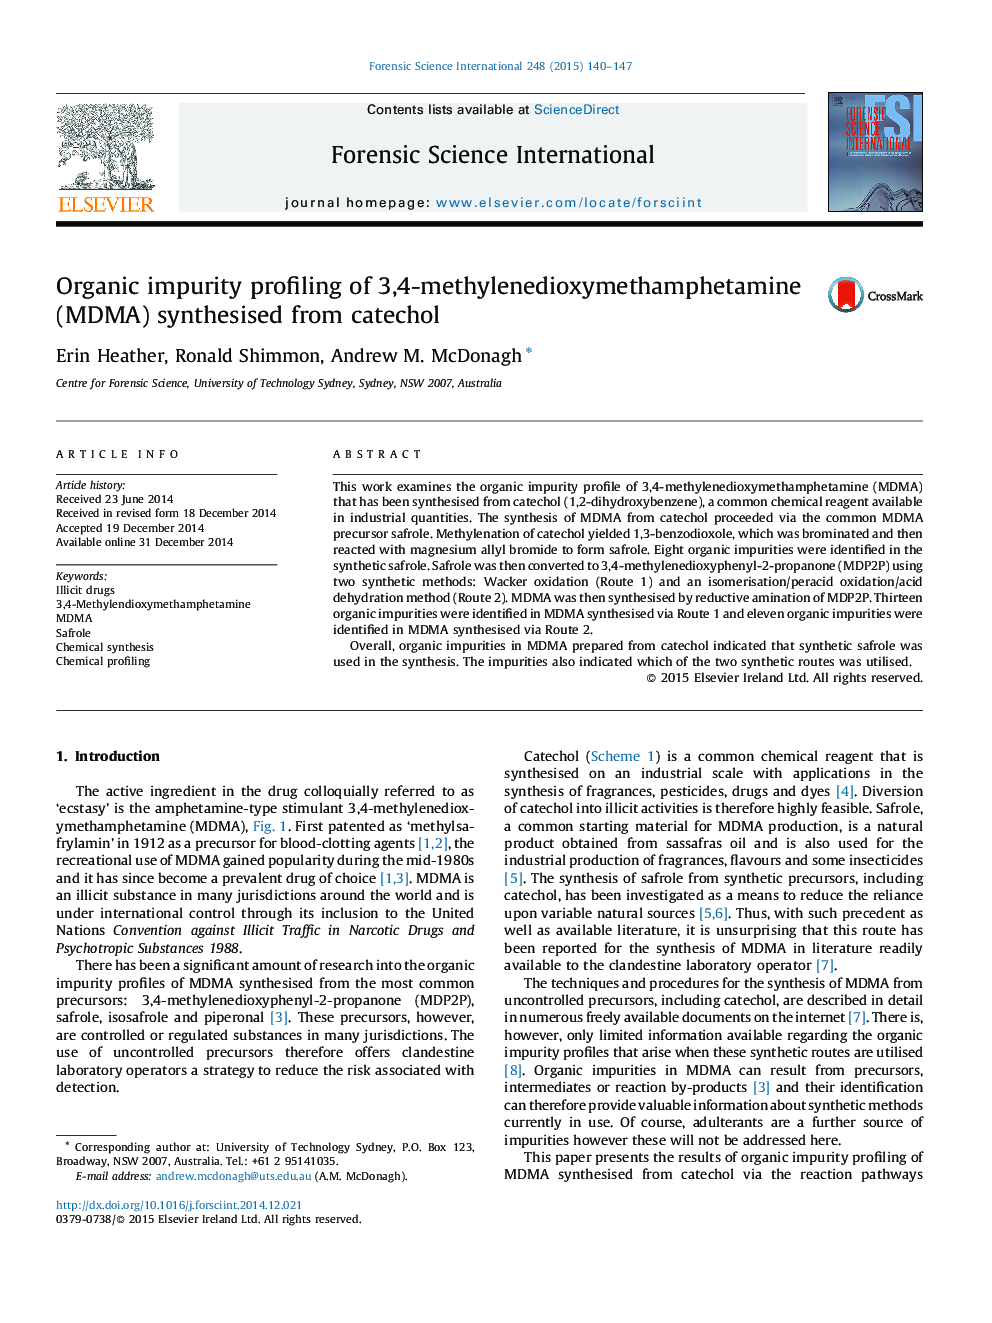 Organic impurity profiling of 3,4-methylenedioxymethamphetamine (MDMA) synthesised from catechol